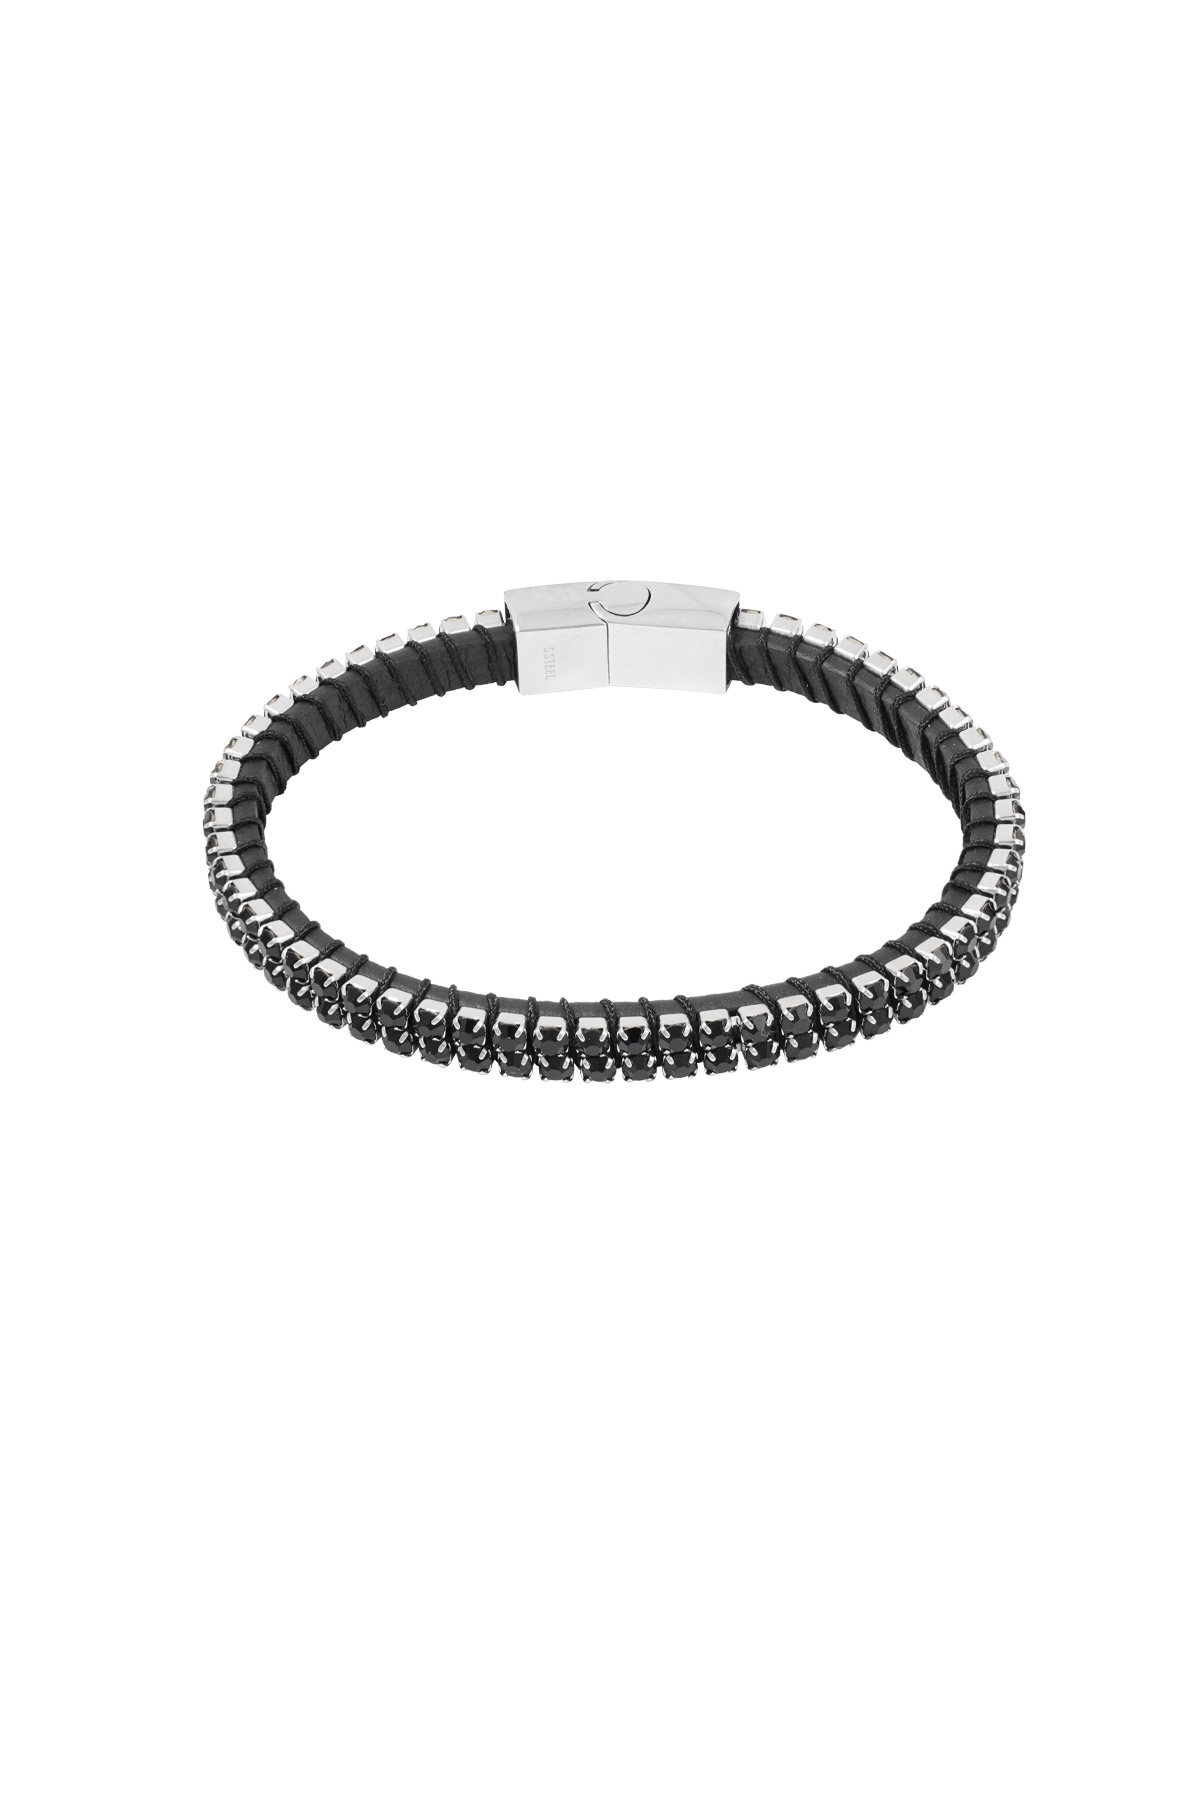 Cool casual men's bracelet - black/silver